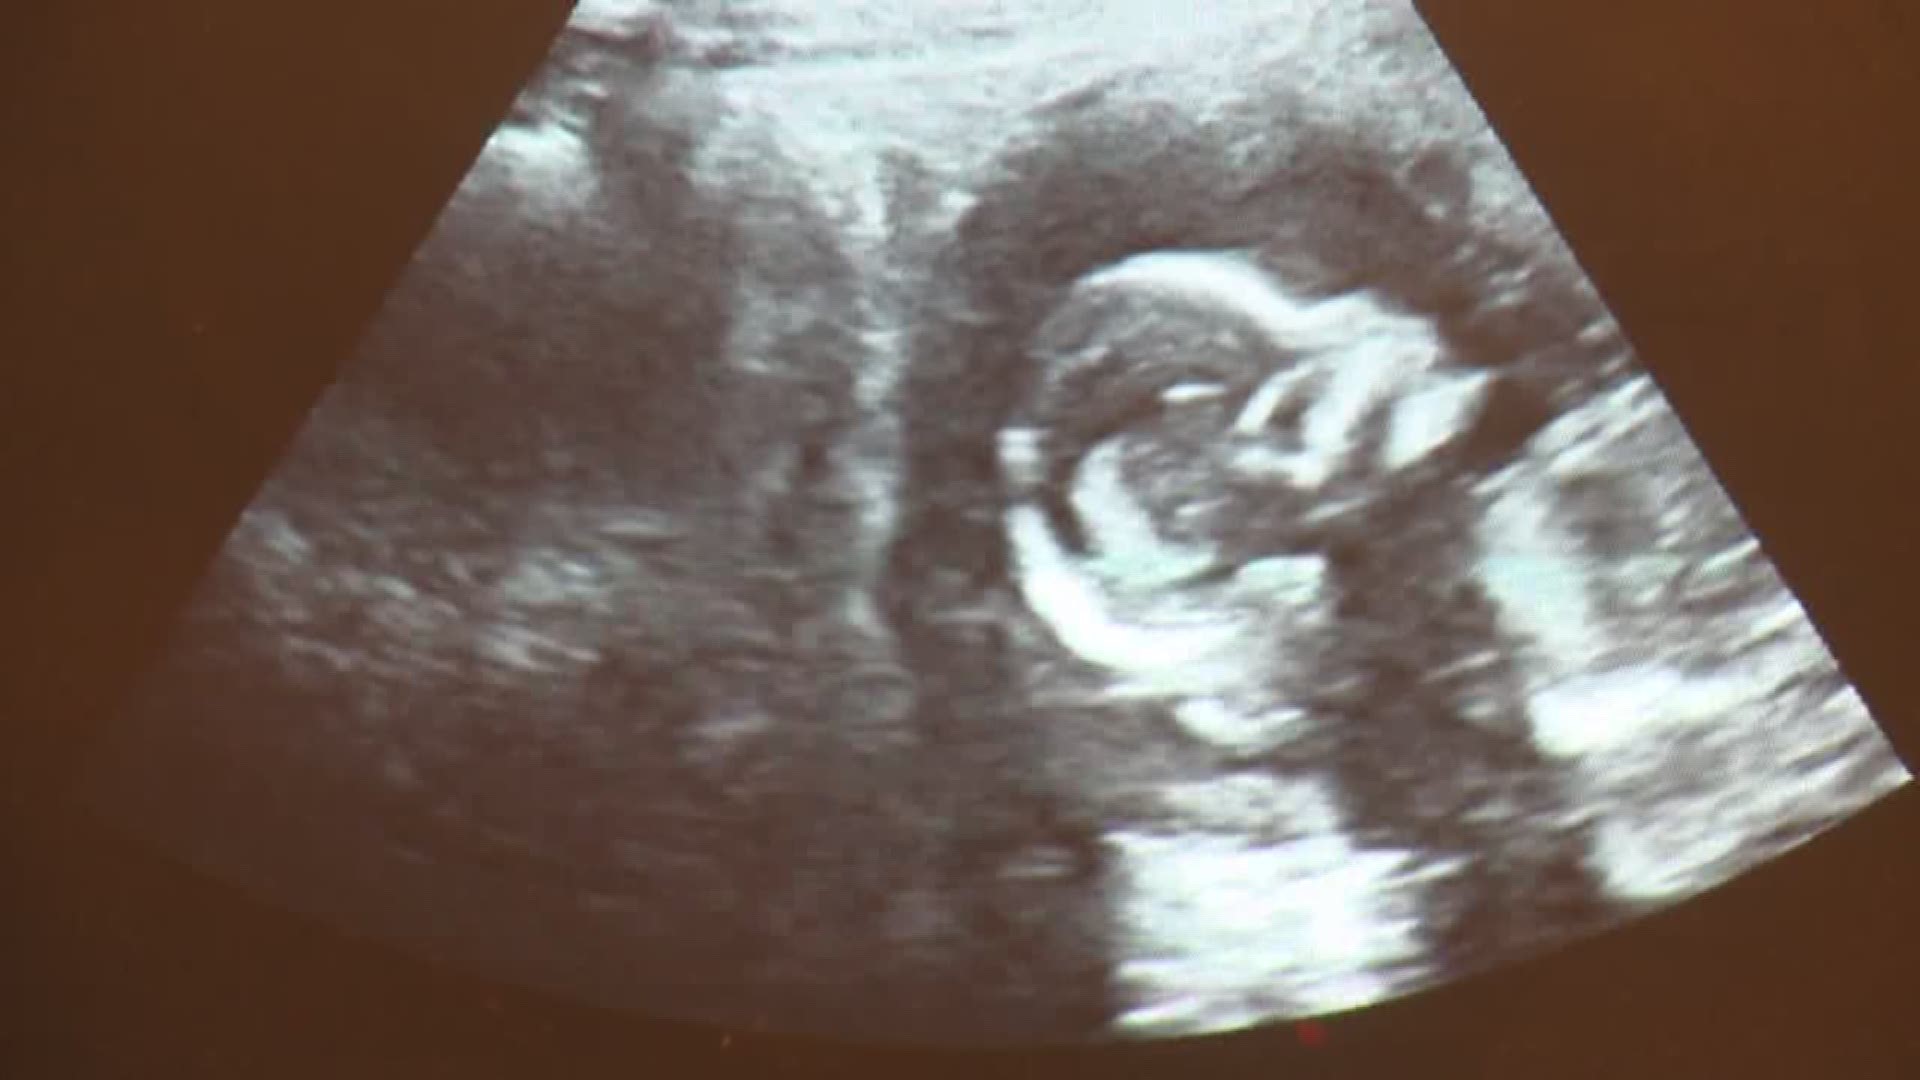 abortion babies at 12 weeks